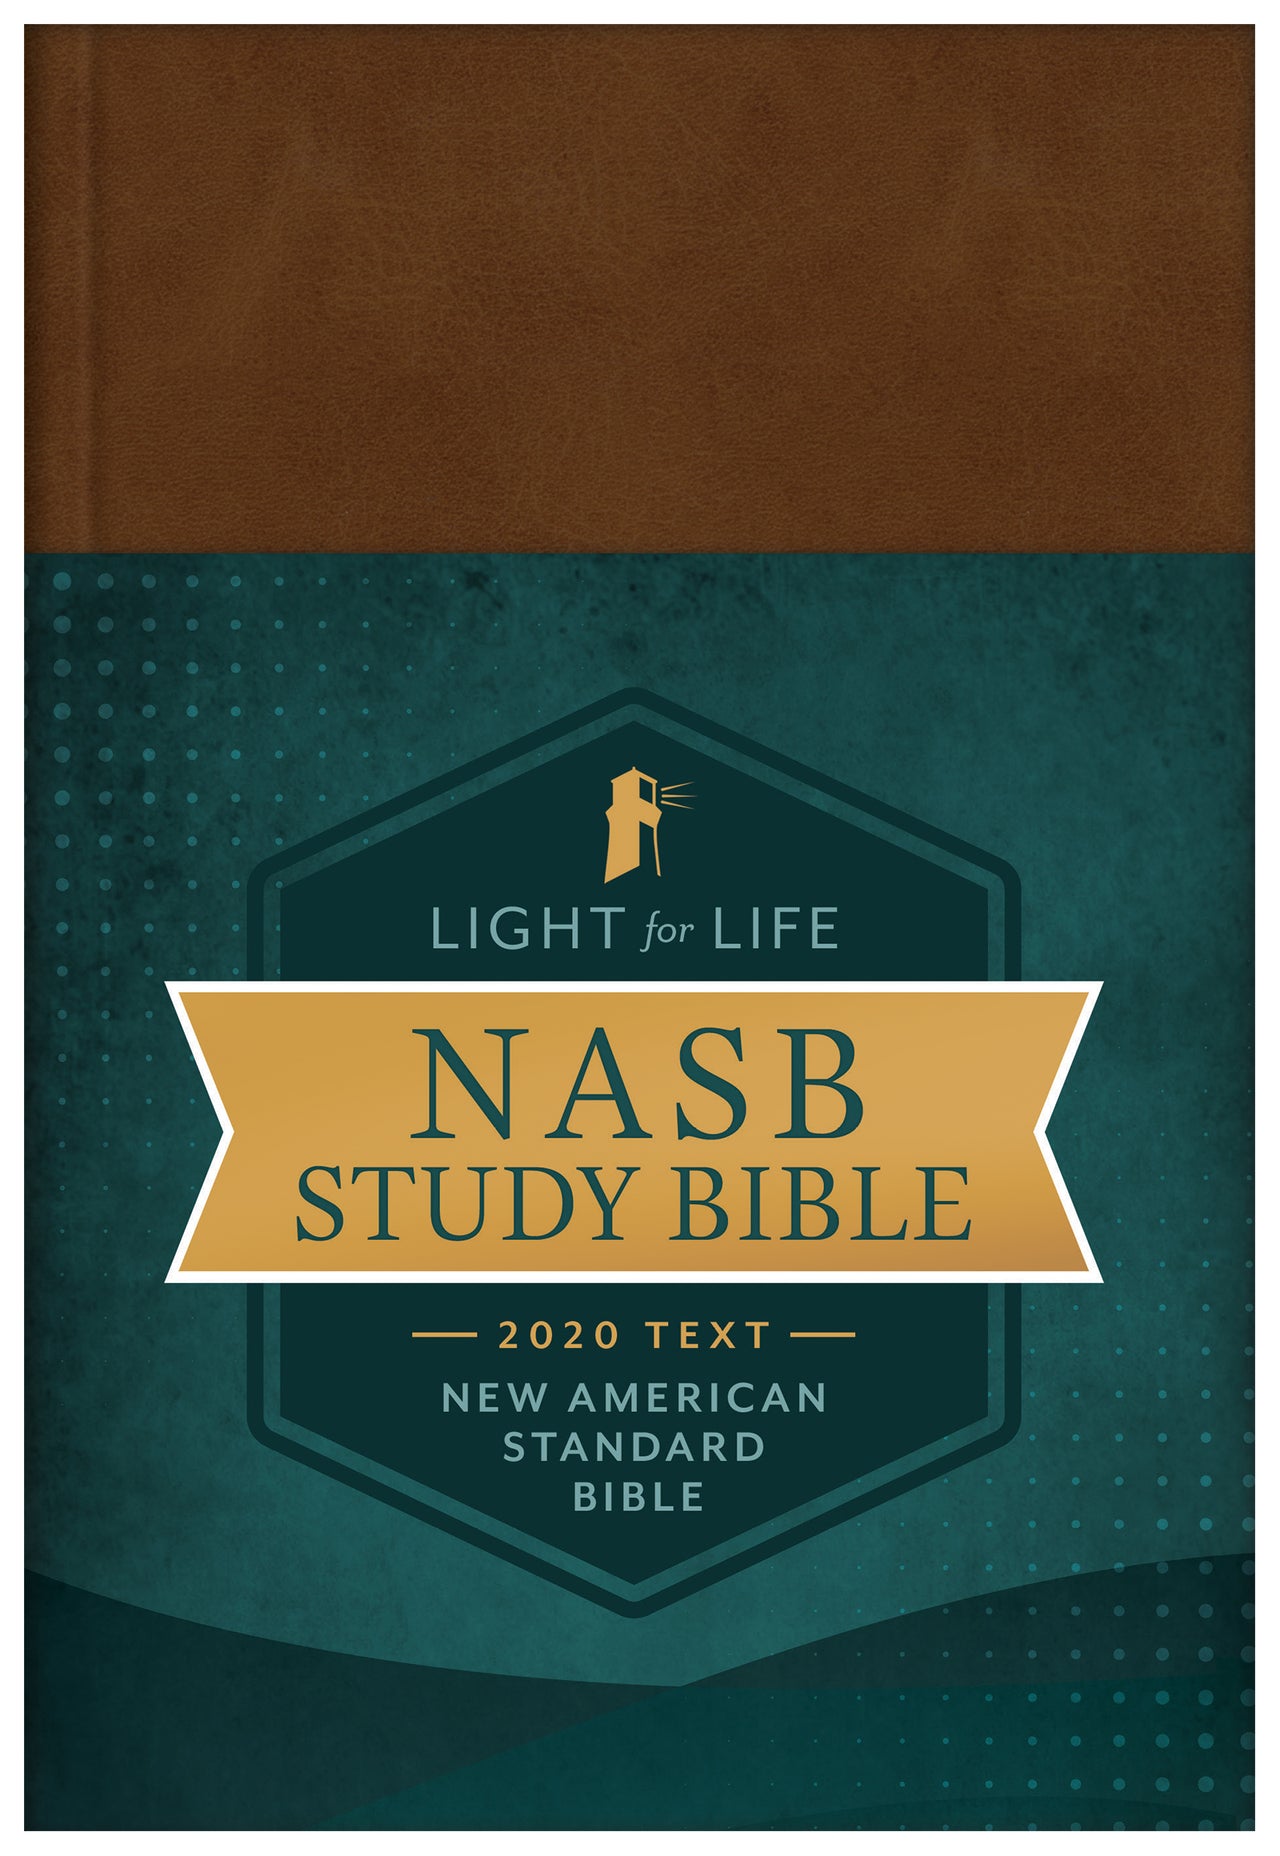 The Light for Life NASB Study Bible [Golden Caramel] - Mercantile Mountain